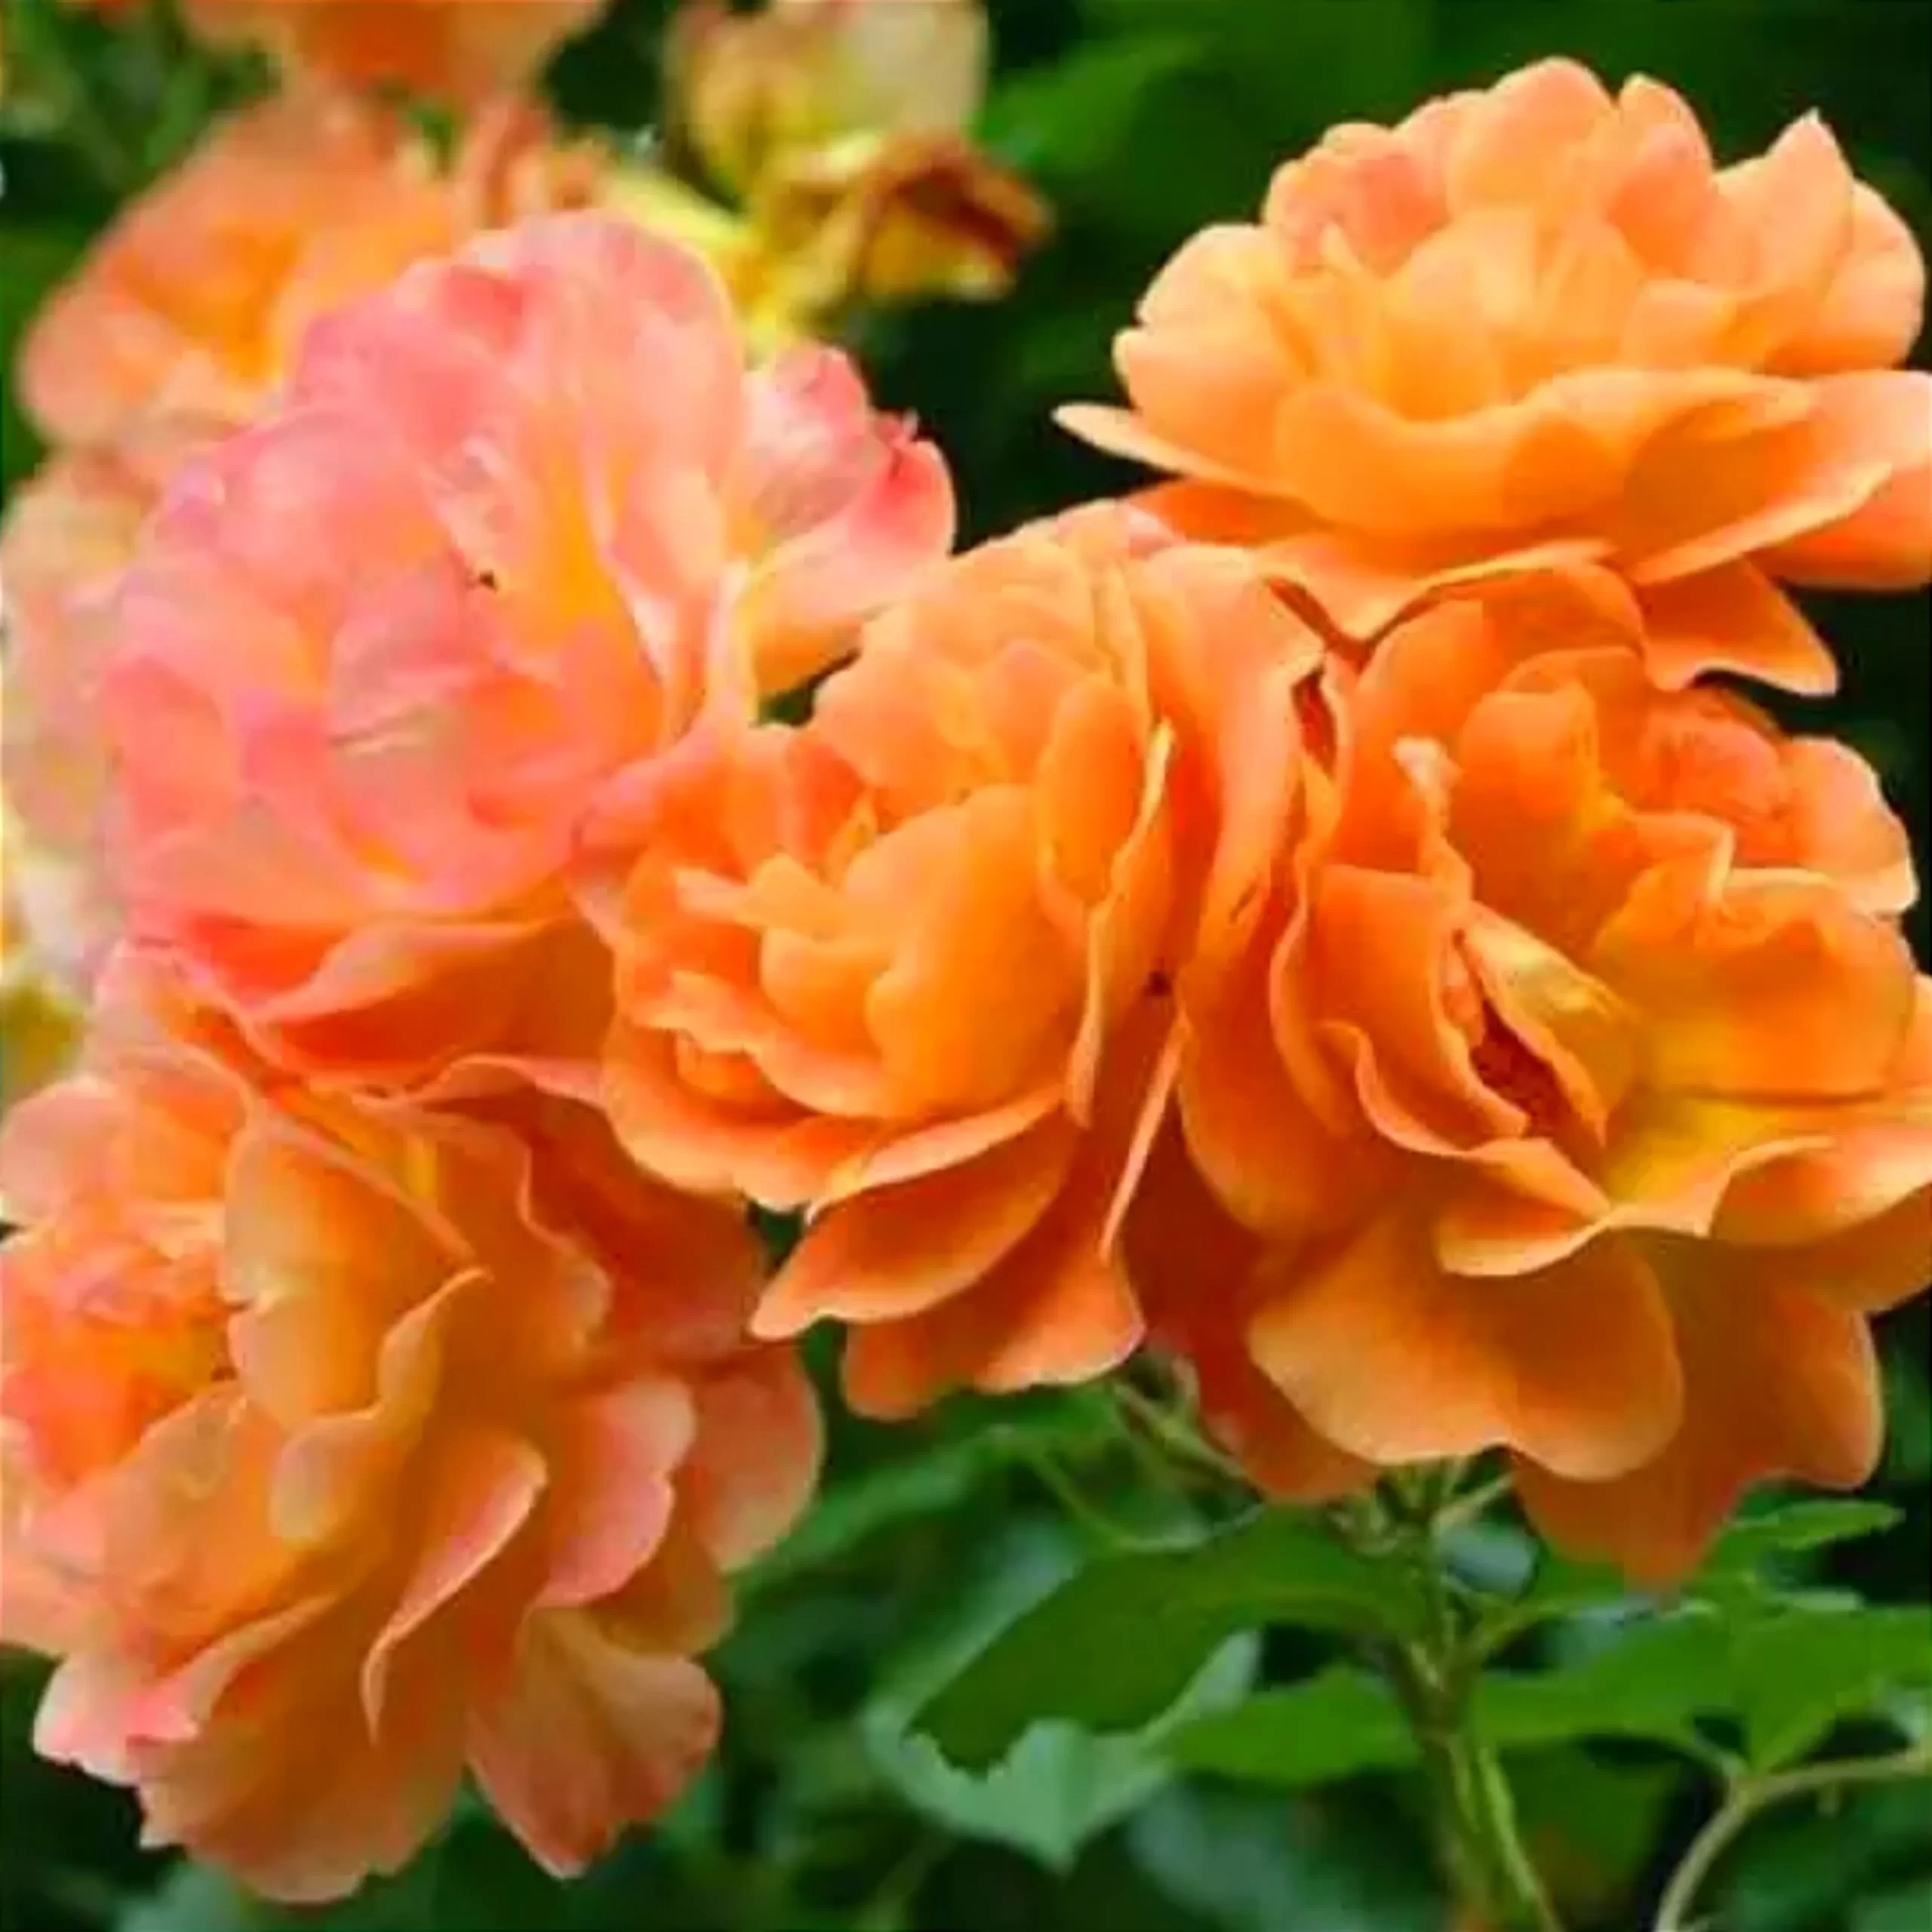 Rosa polyantha “Orange Fairy”